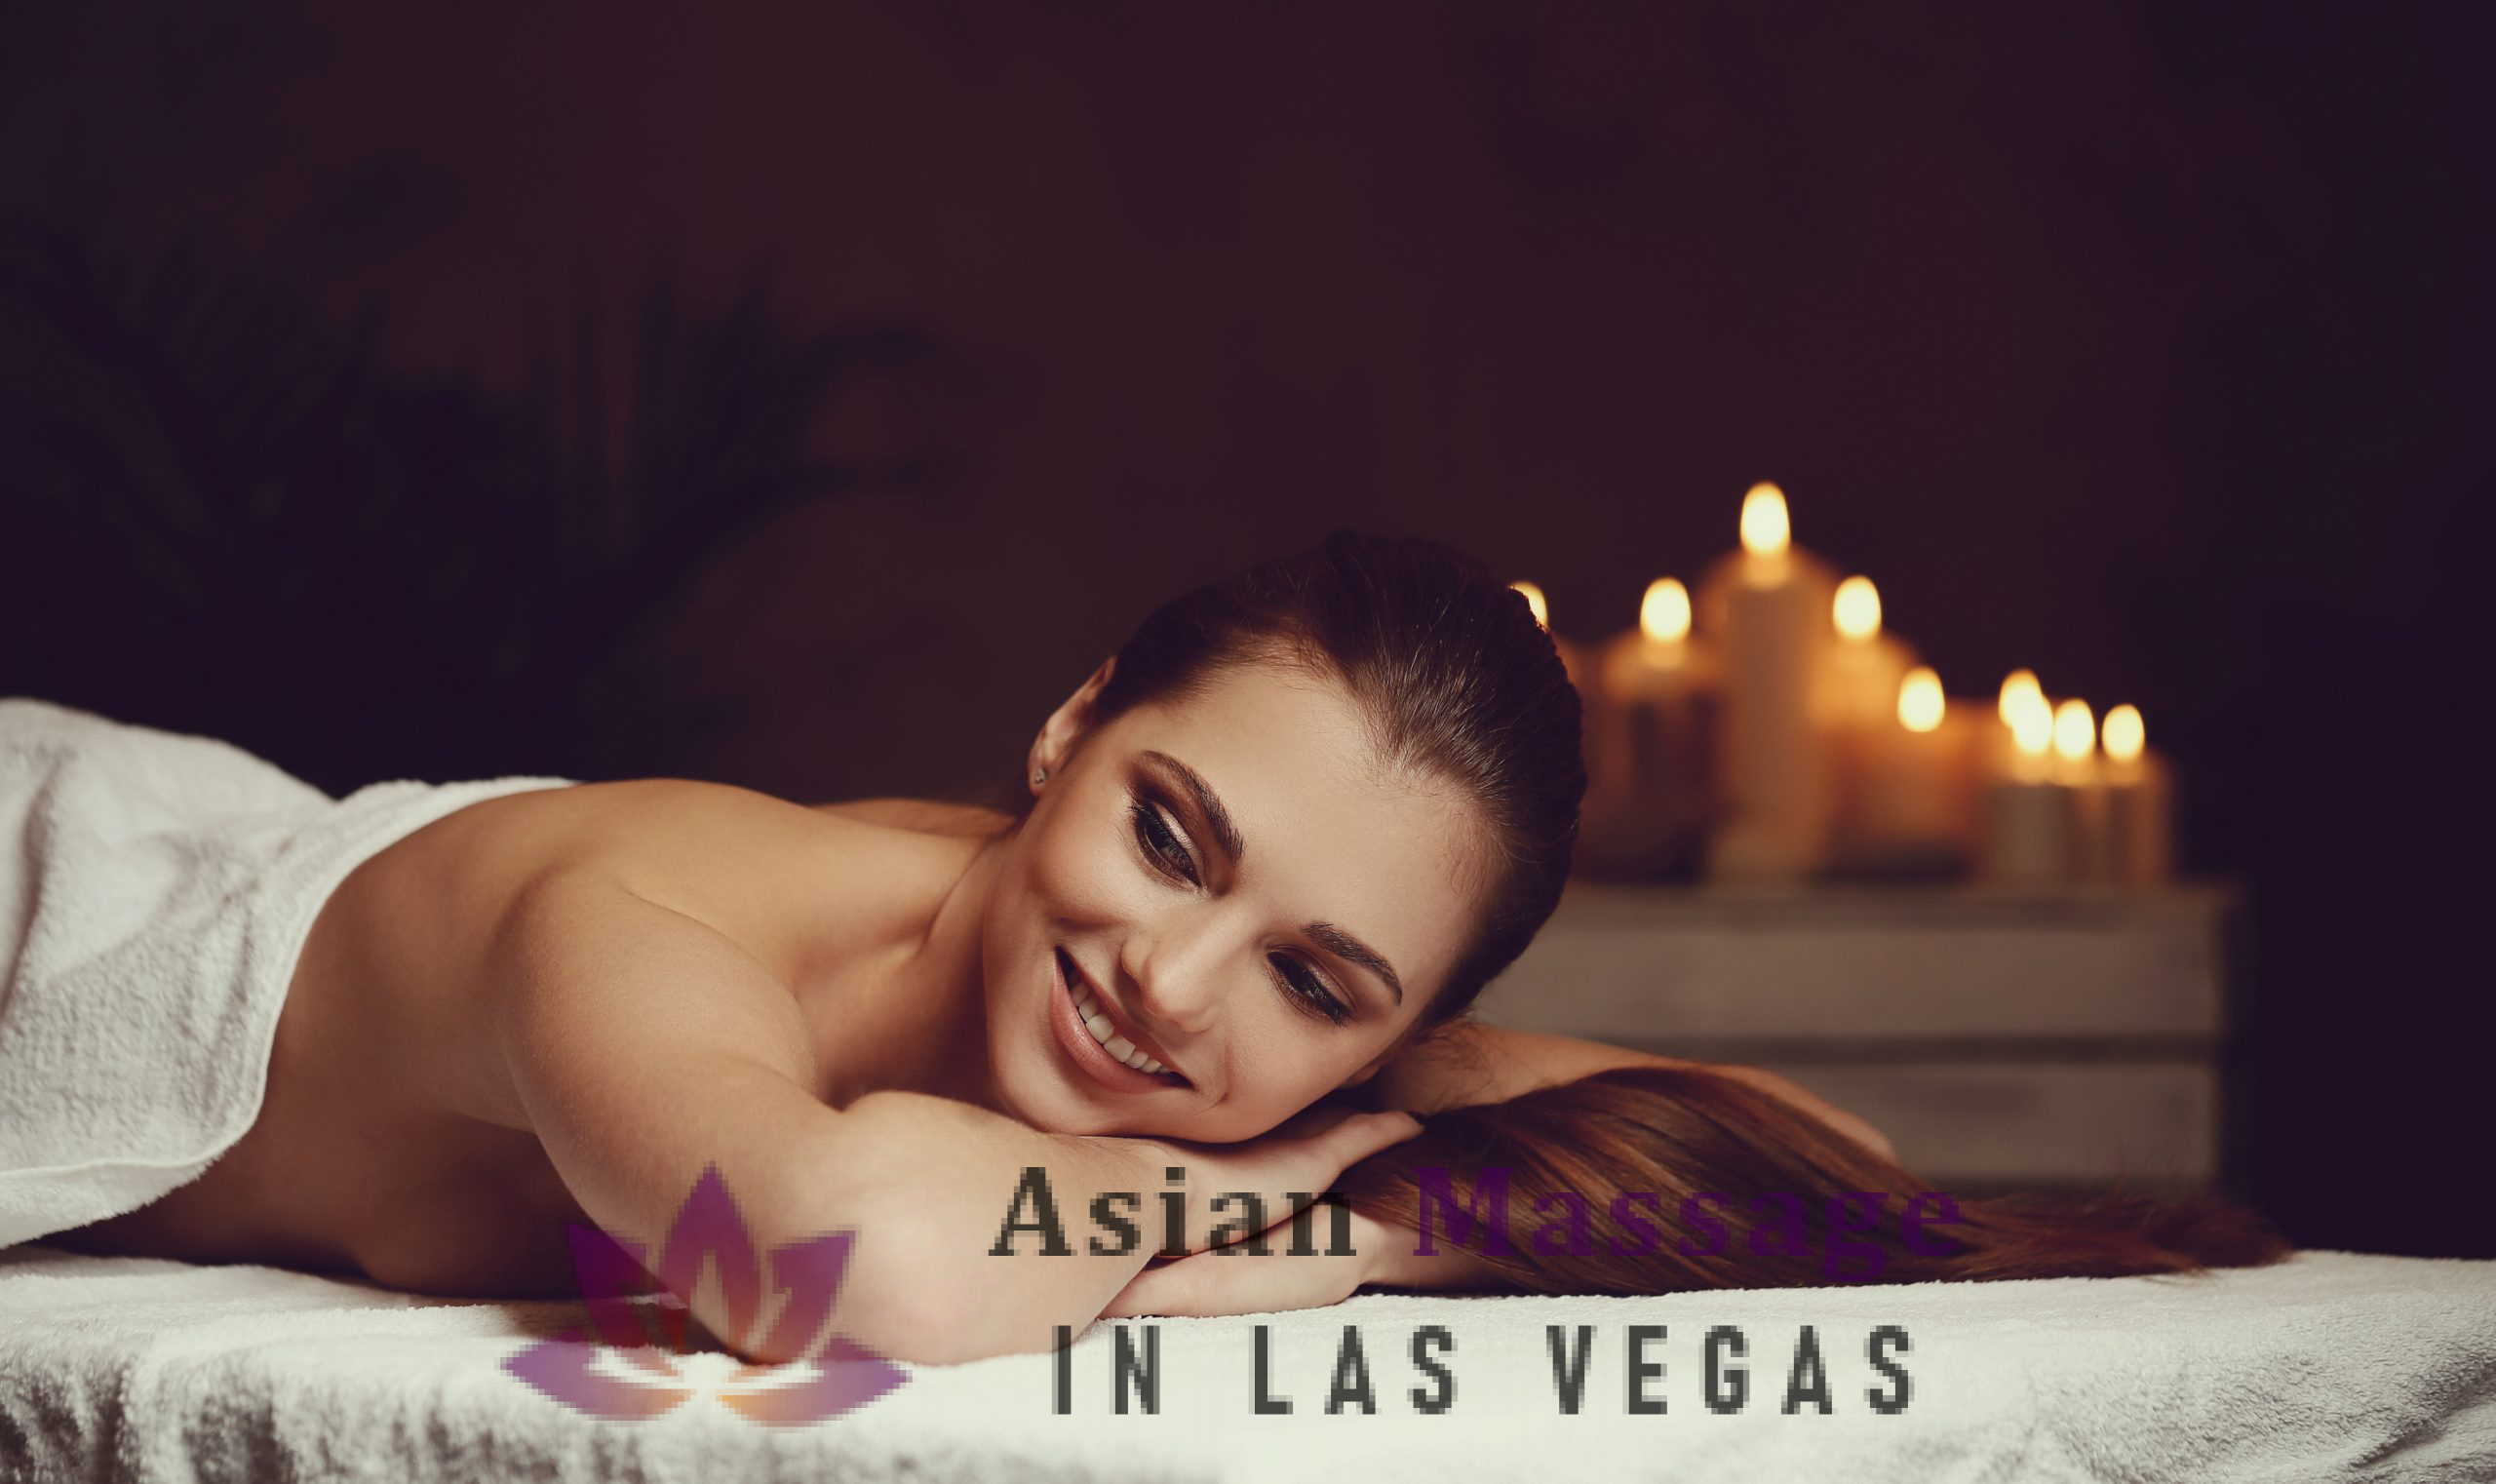 Outcall Massage Las Vegas - Asian Massage In Las Vegas